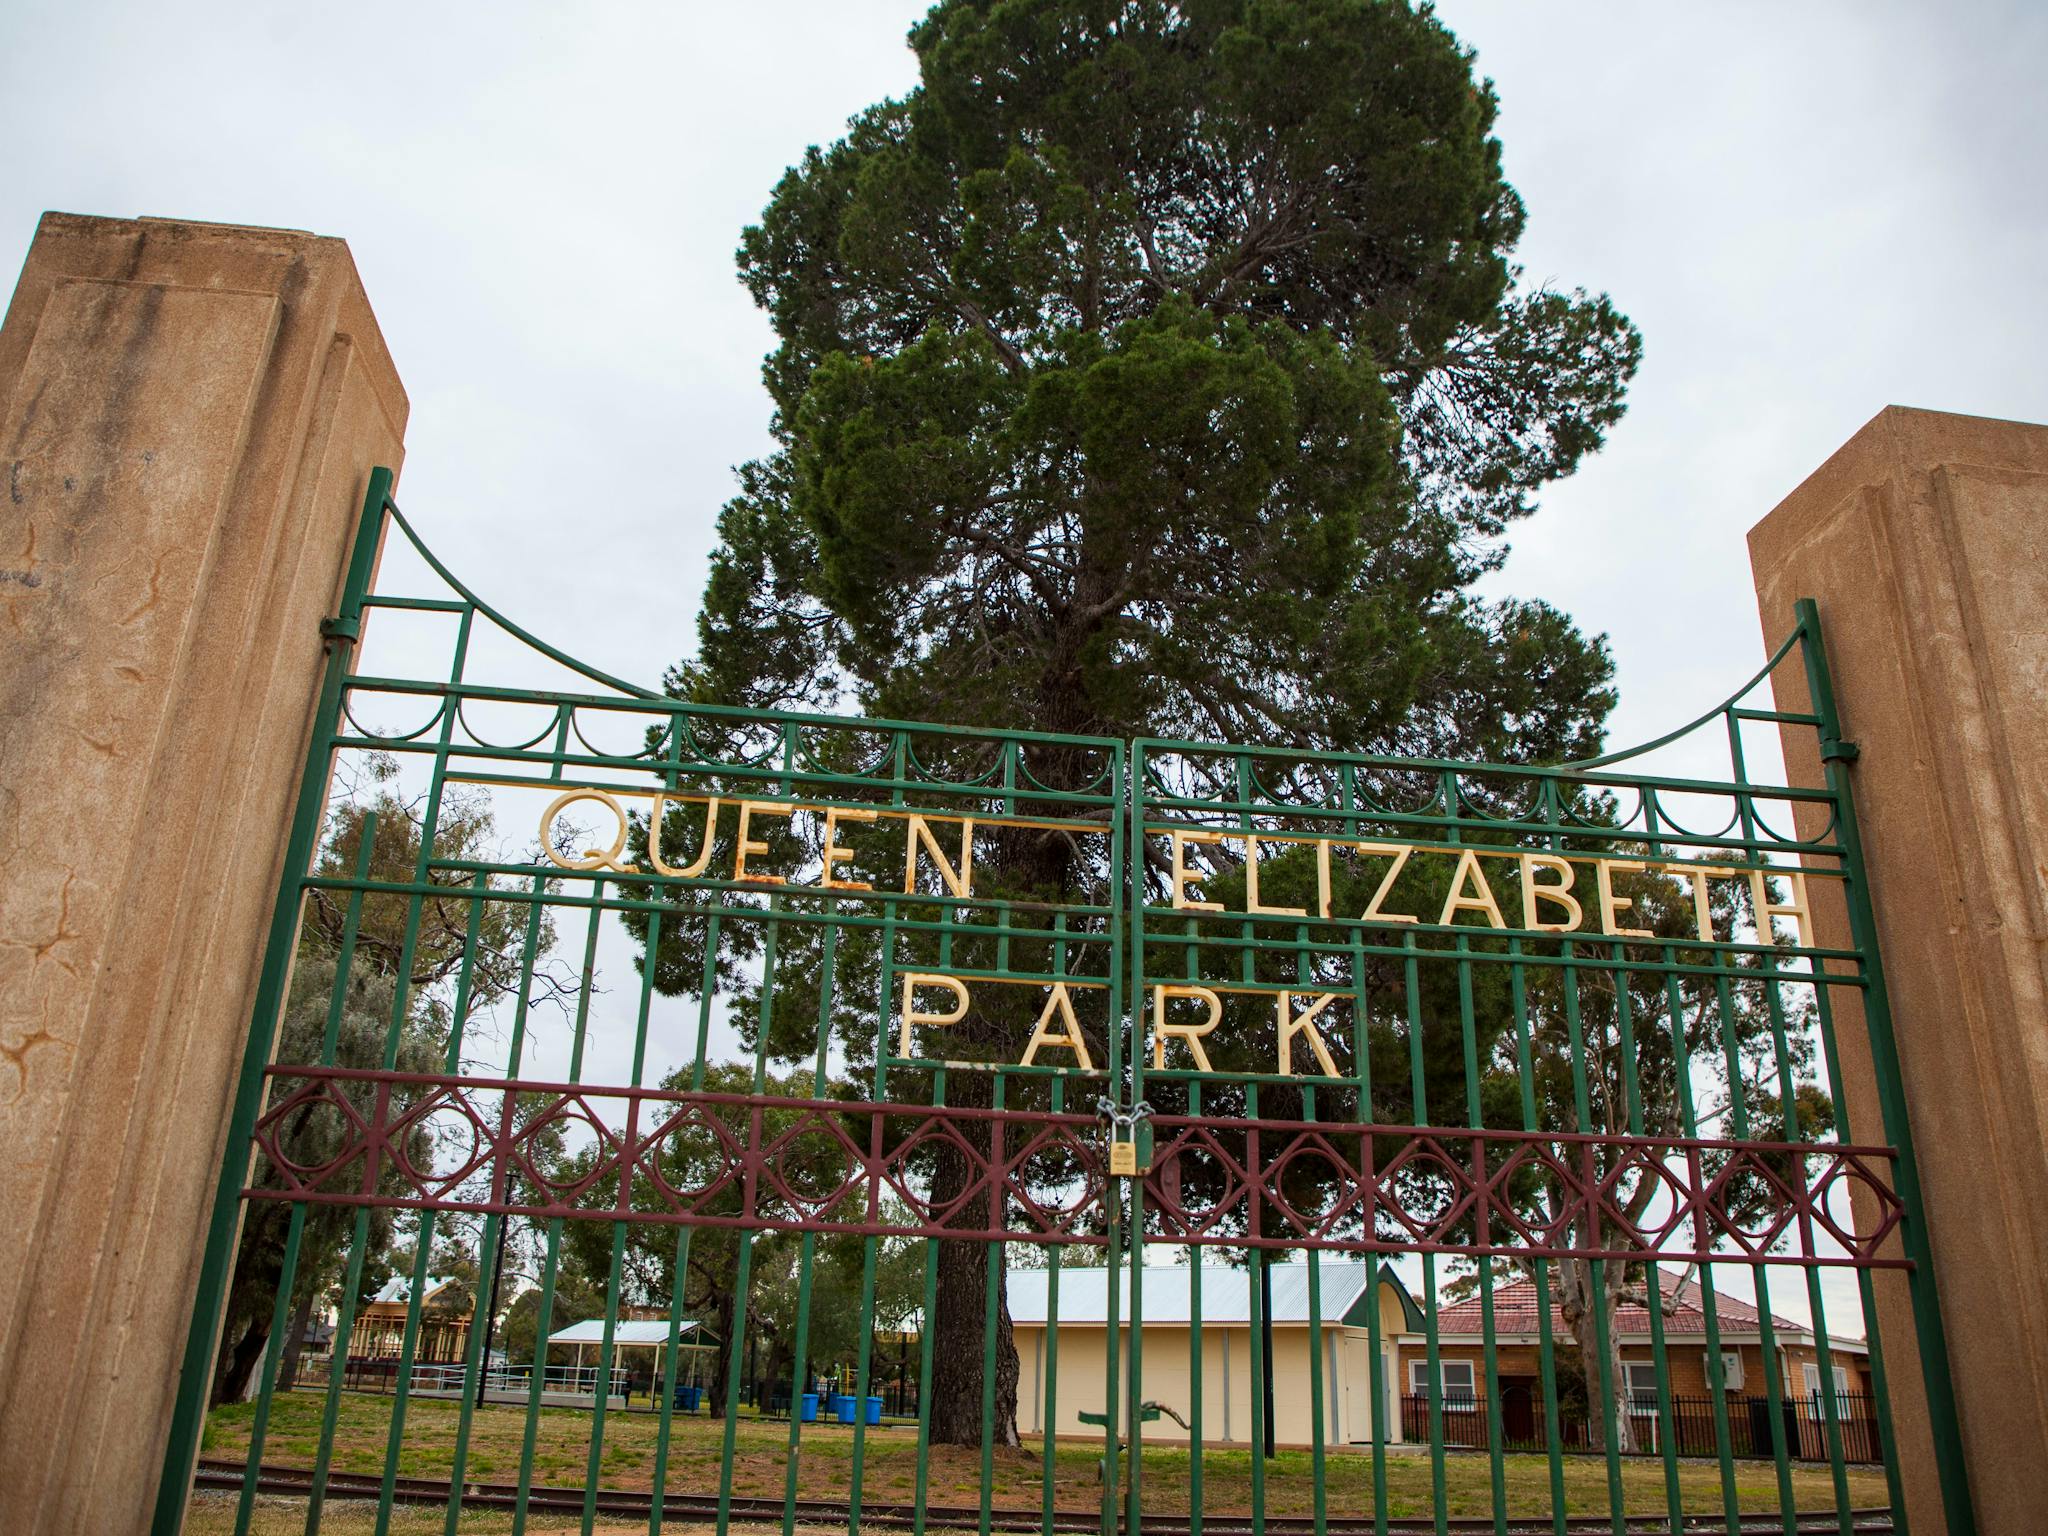 Queen Elizabeth Park Gate